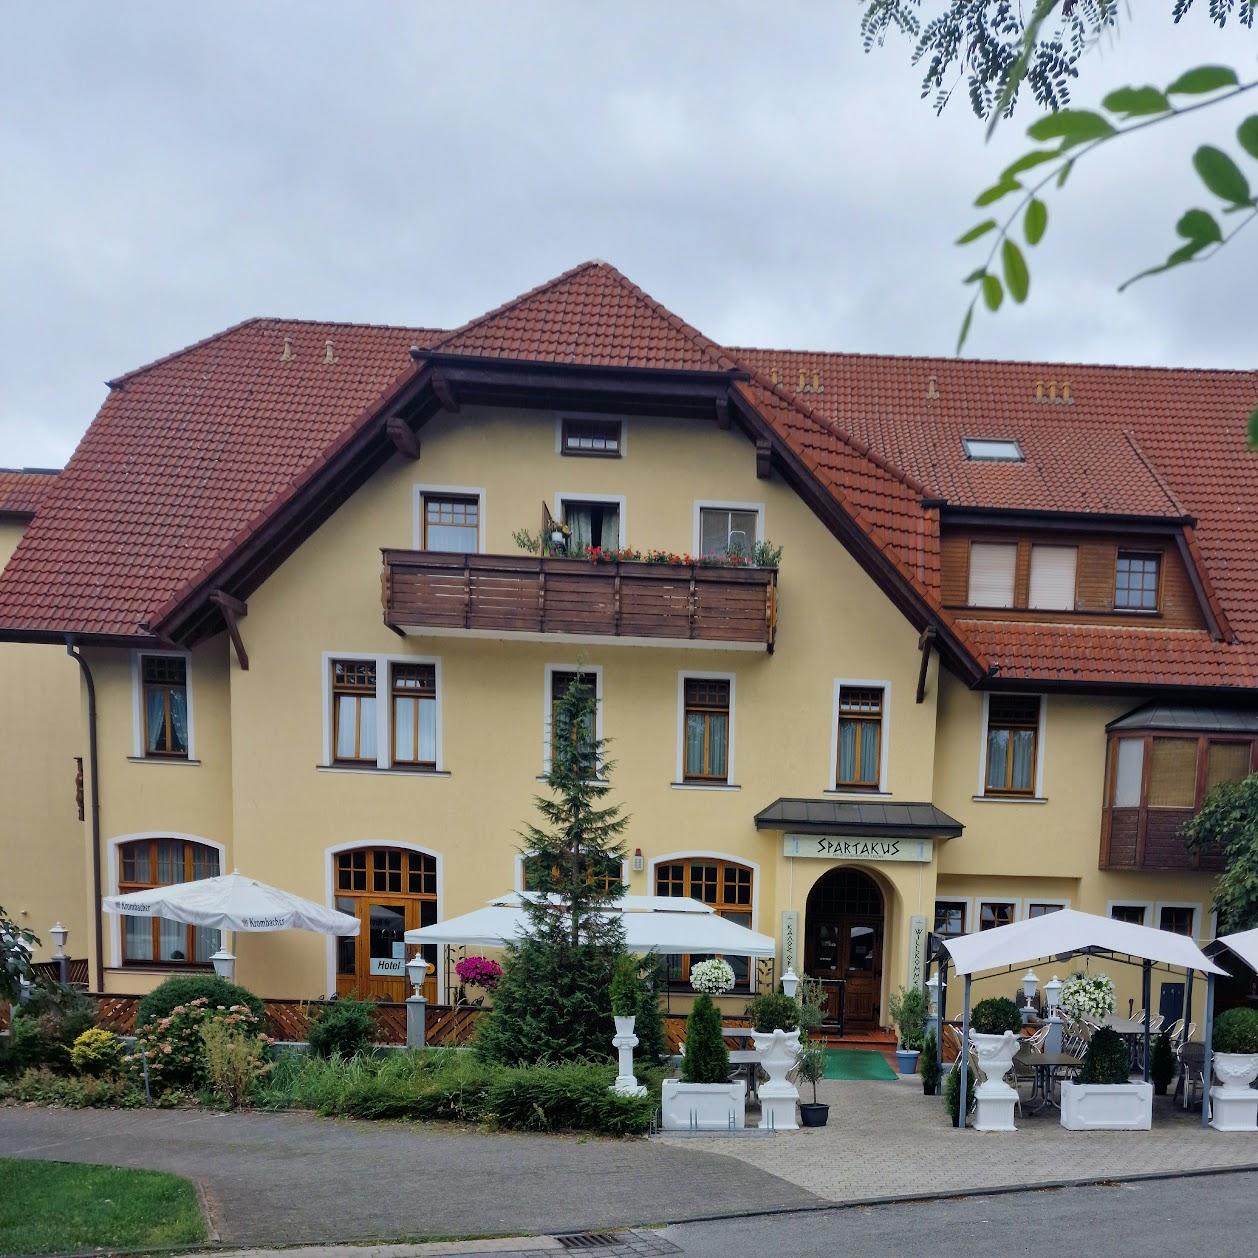 Restaurant "Gasthaus Dörenkrug" in Augustdorf